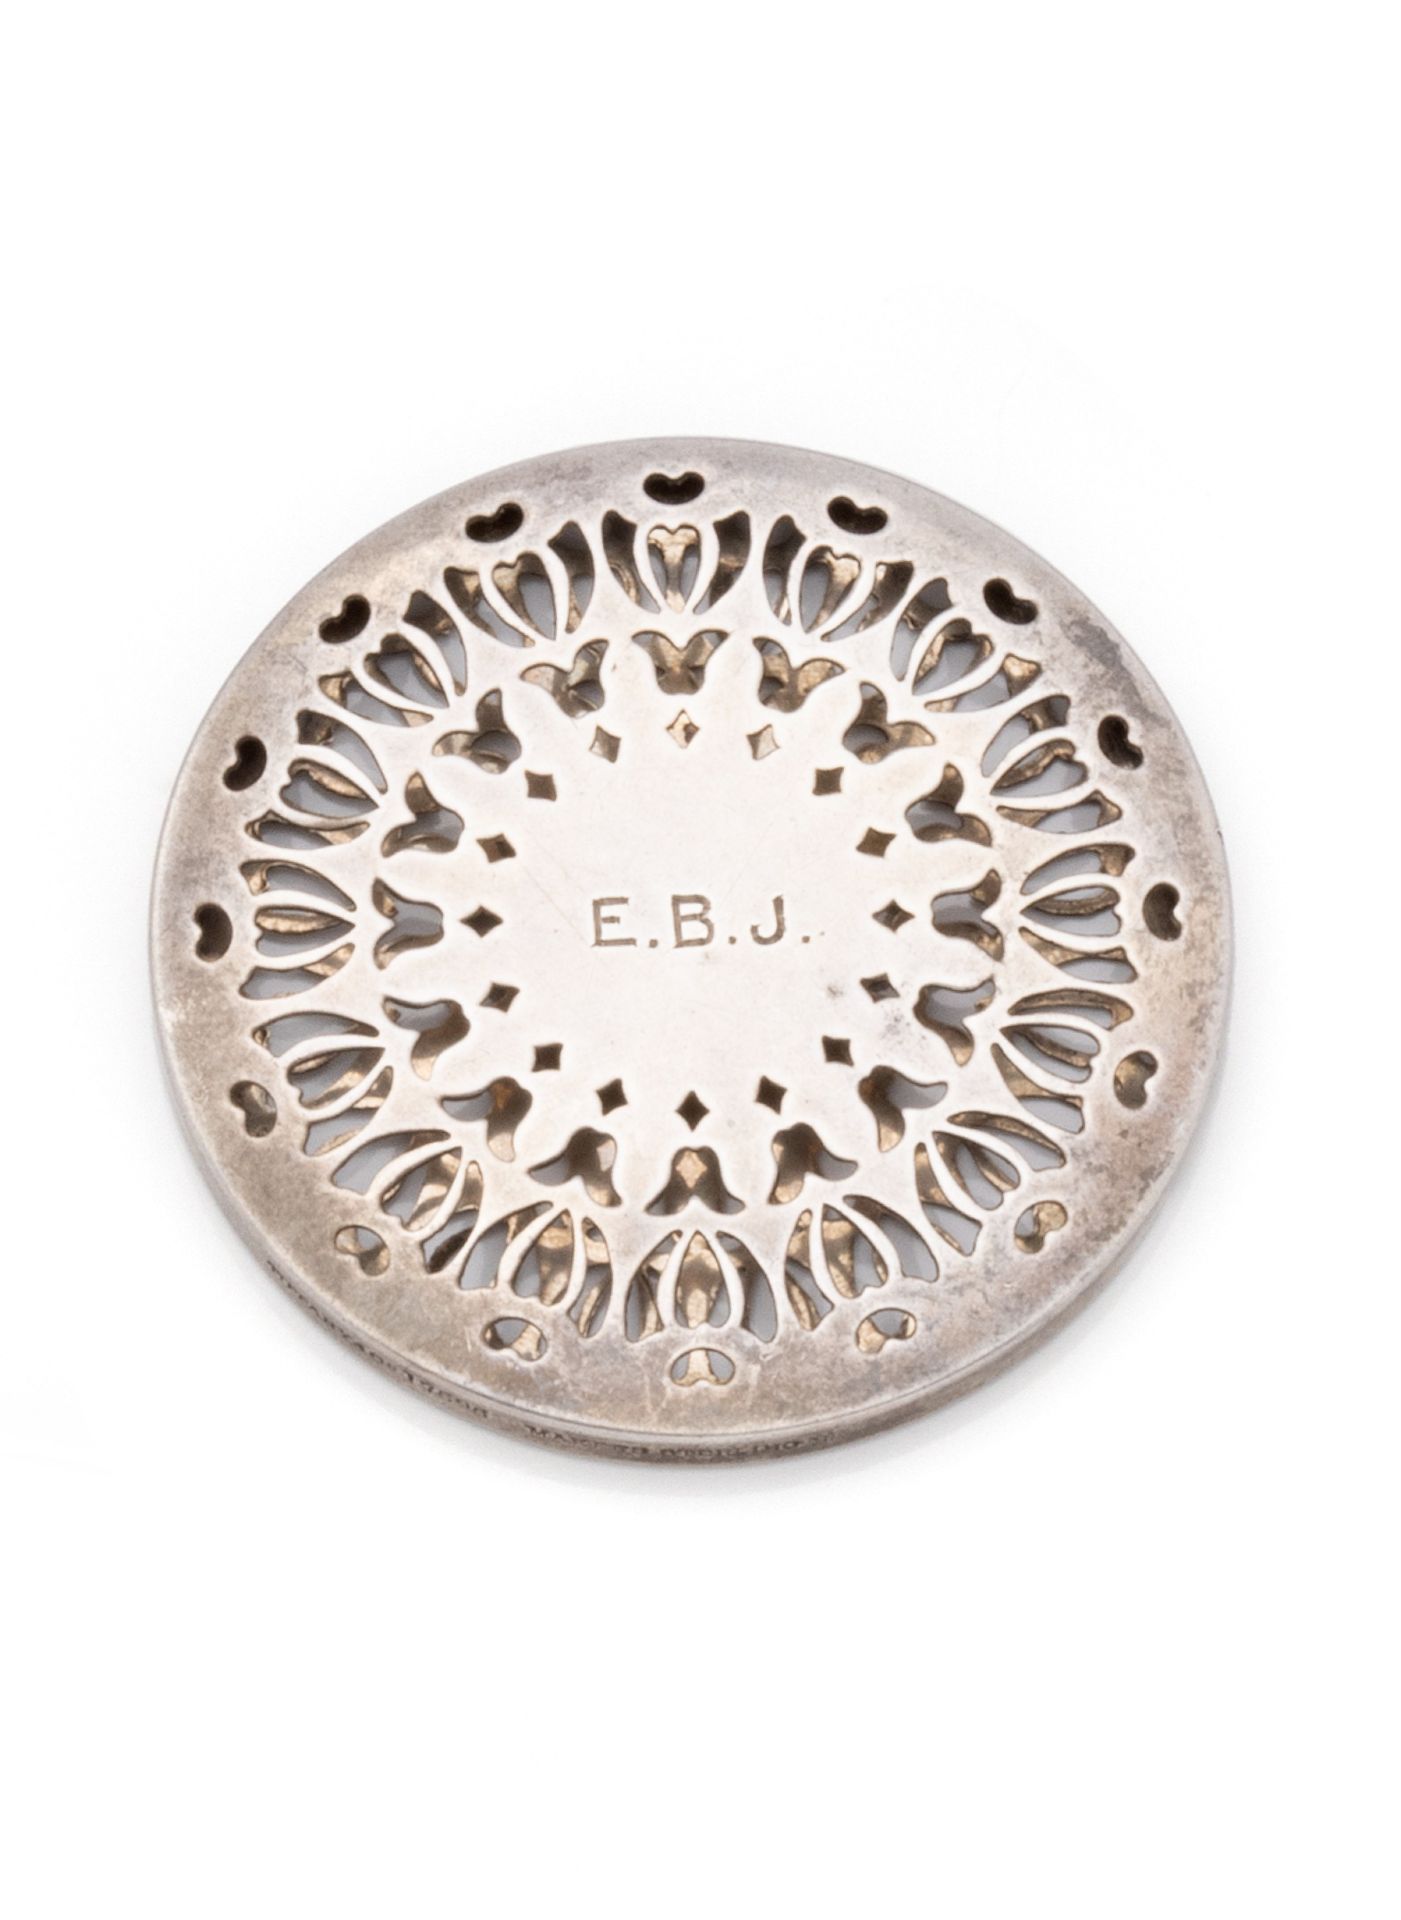 Null 缇芬妮公司

圆形银制葡萄架(925/1000)，上面有一朵镂空的睡莲花蕾，上面有一颗心。一面有E.B.J的字样。

有签名和编号的17596

直径&hellip;